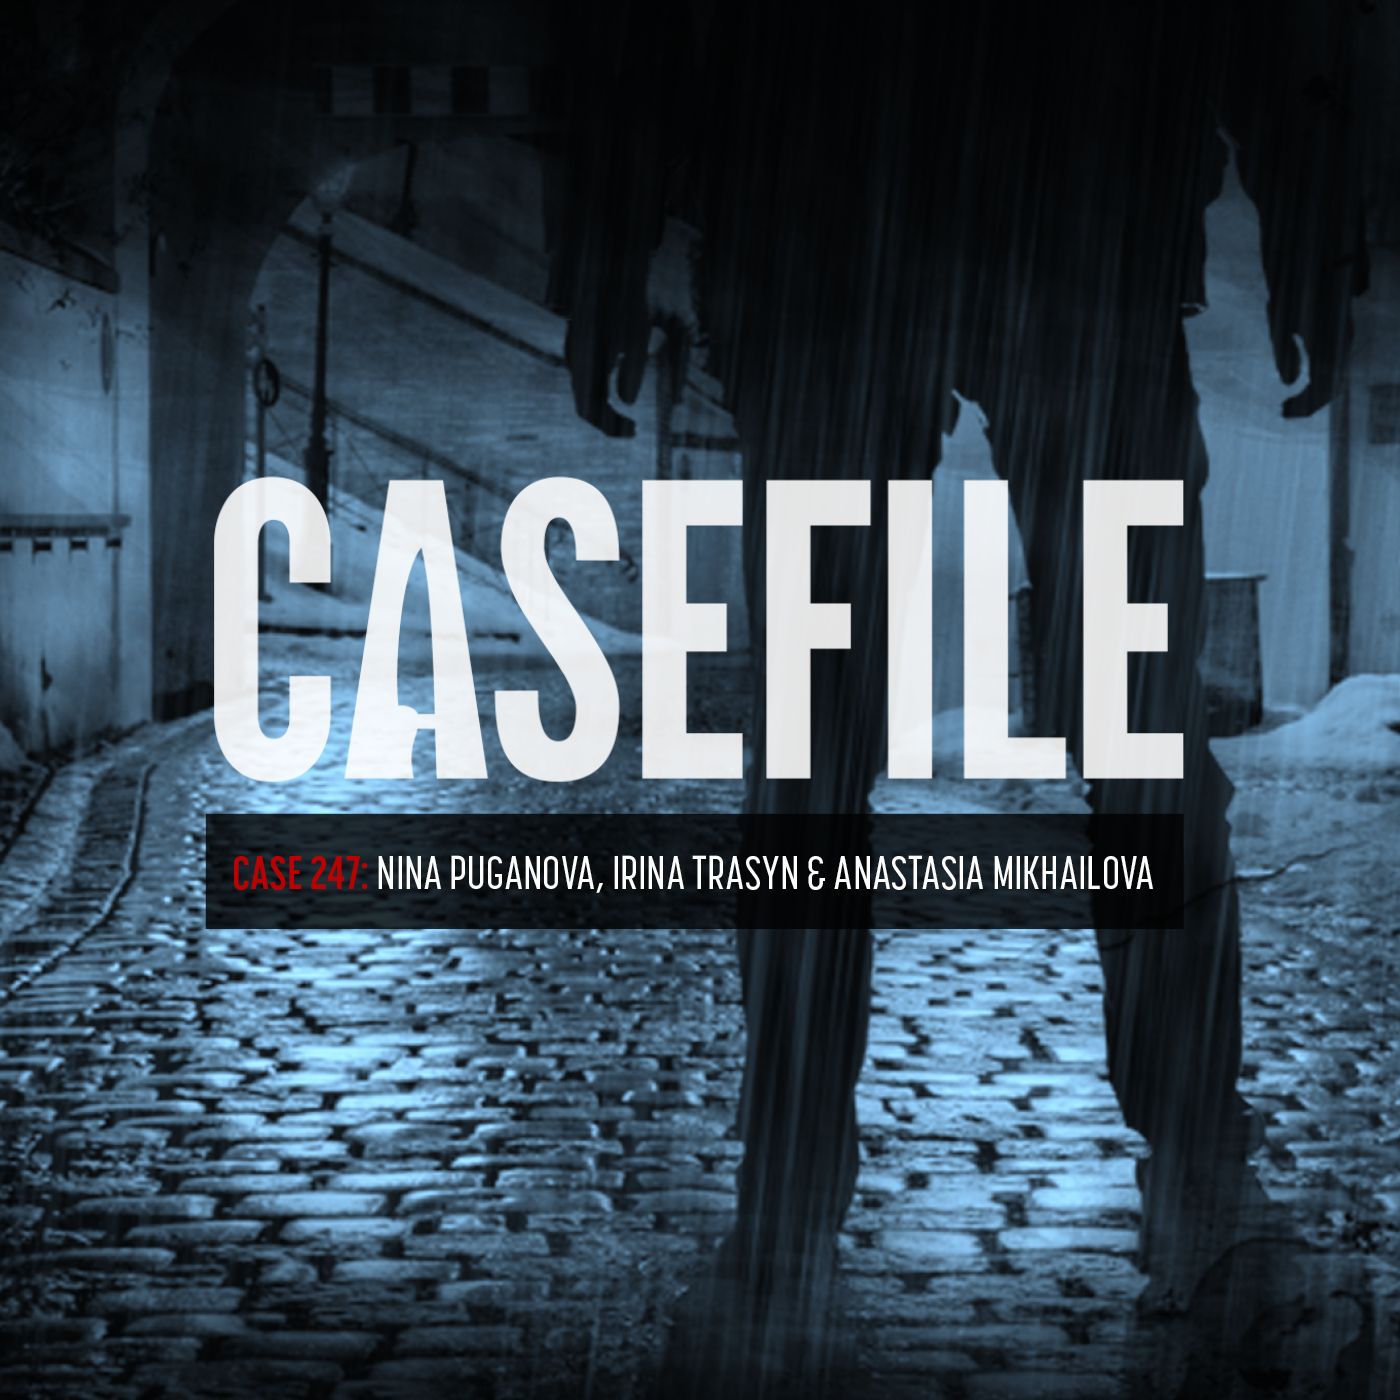 Casefile True Crime / Case 247: Nina Puganova, Irina Trasyn